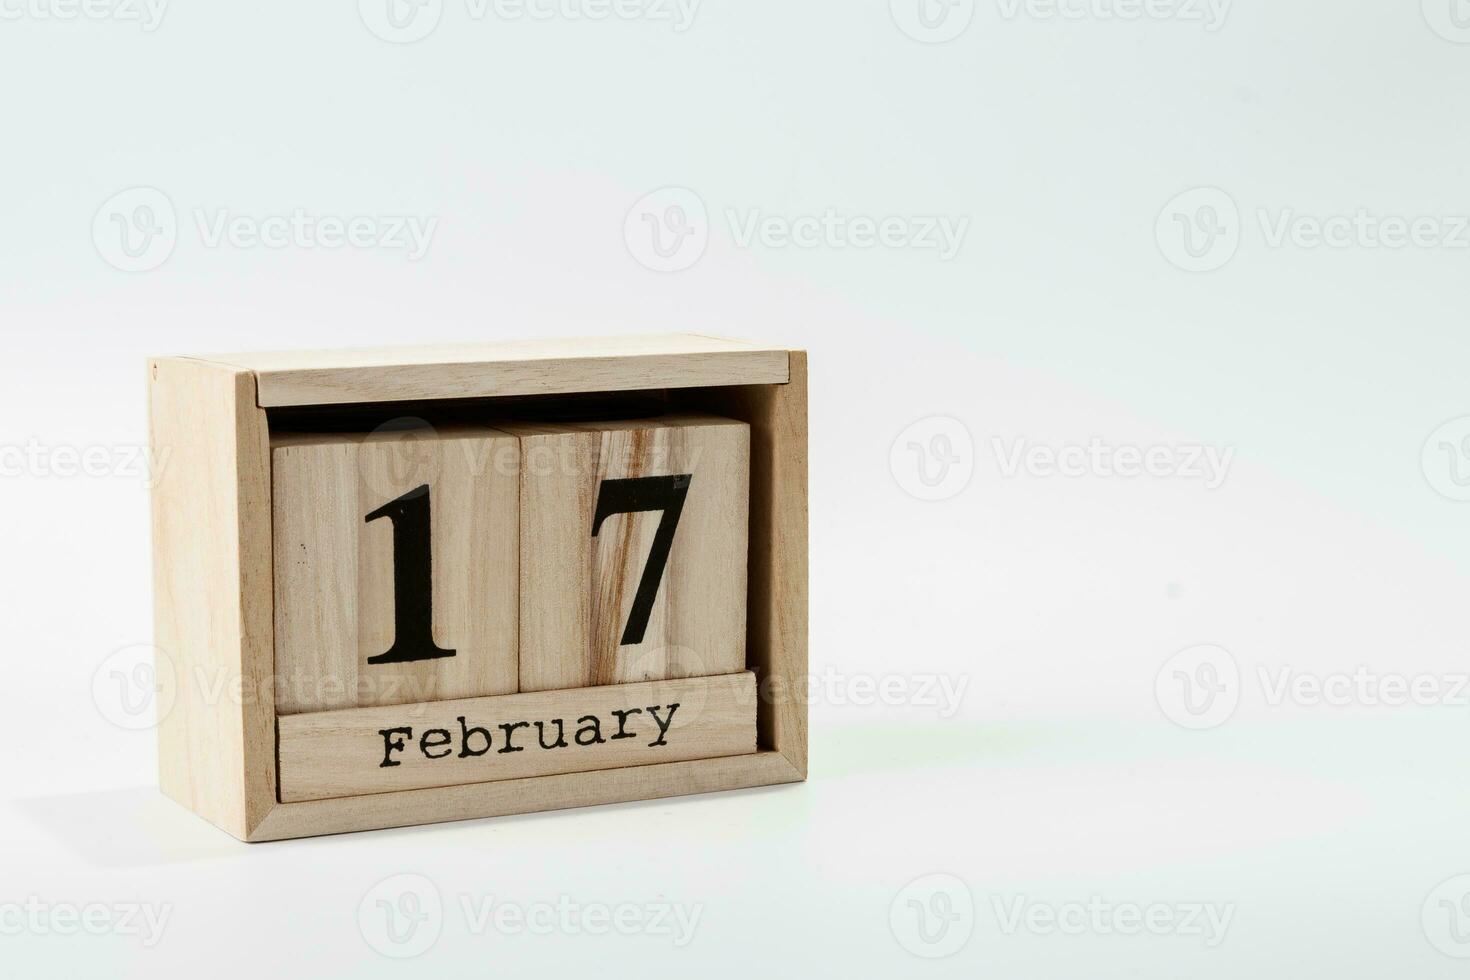 trä- kalender februari 17 på en vit bakgrund foto